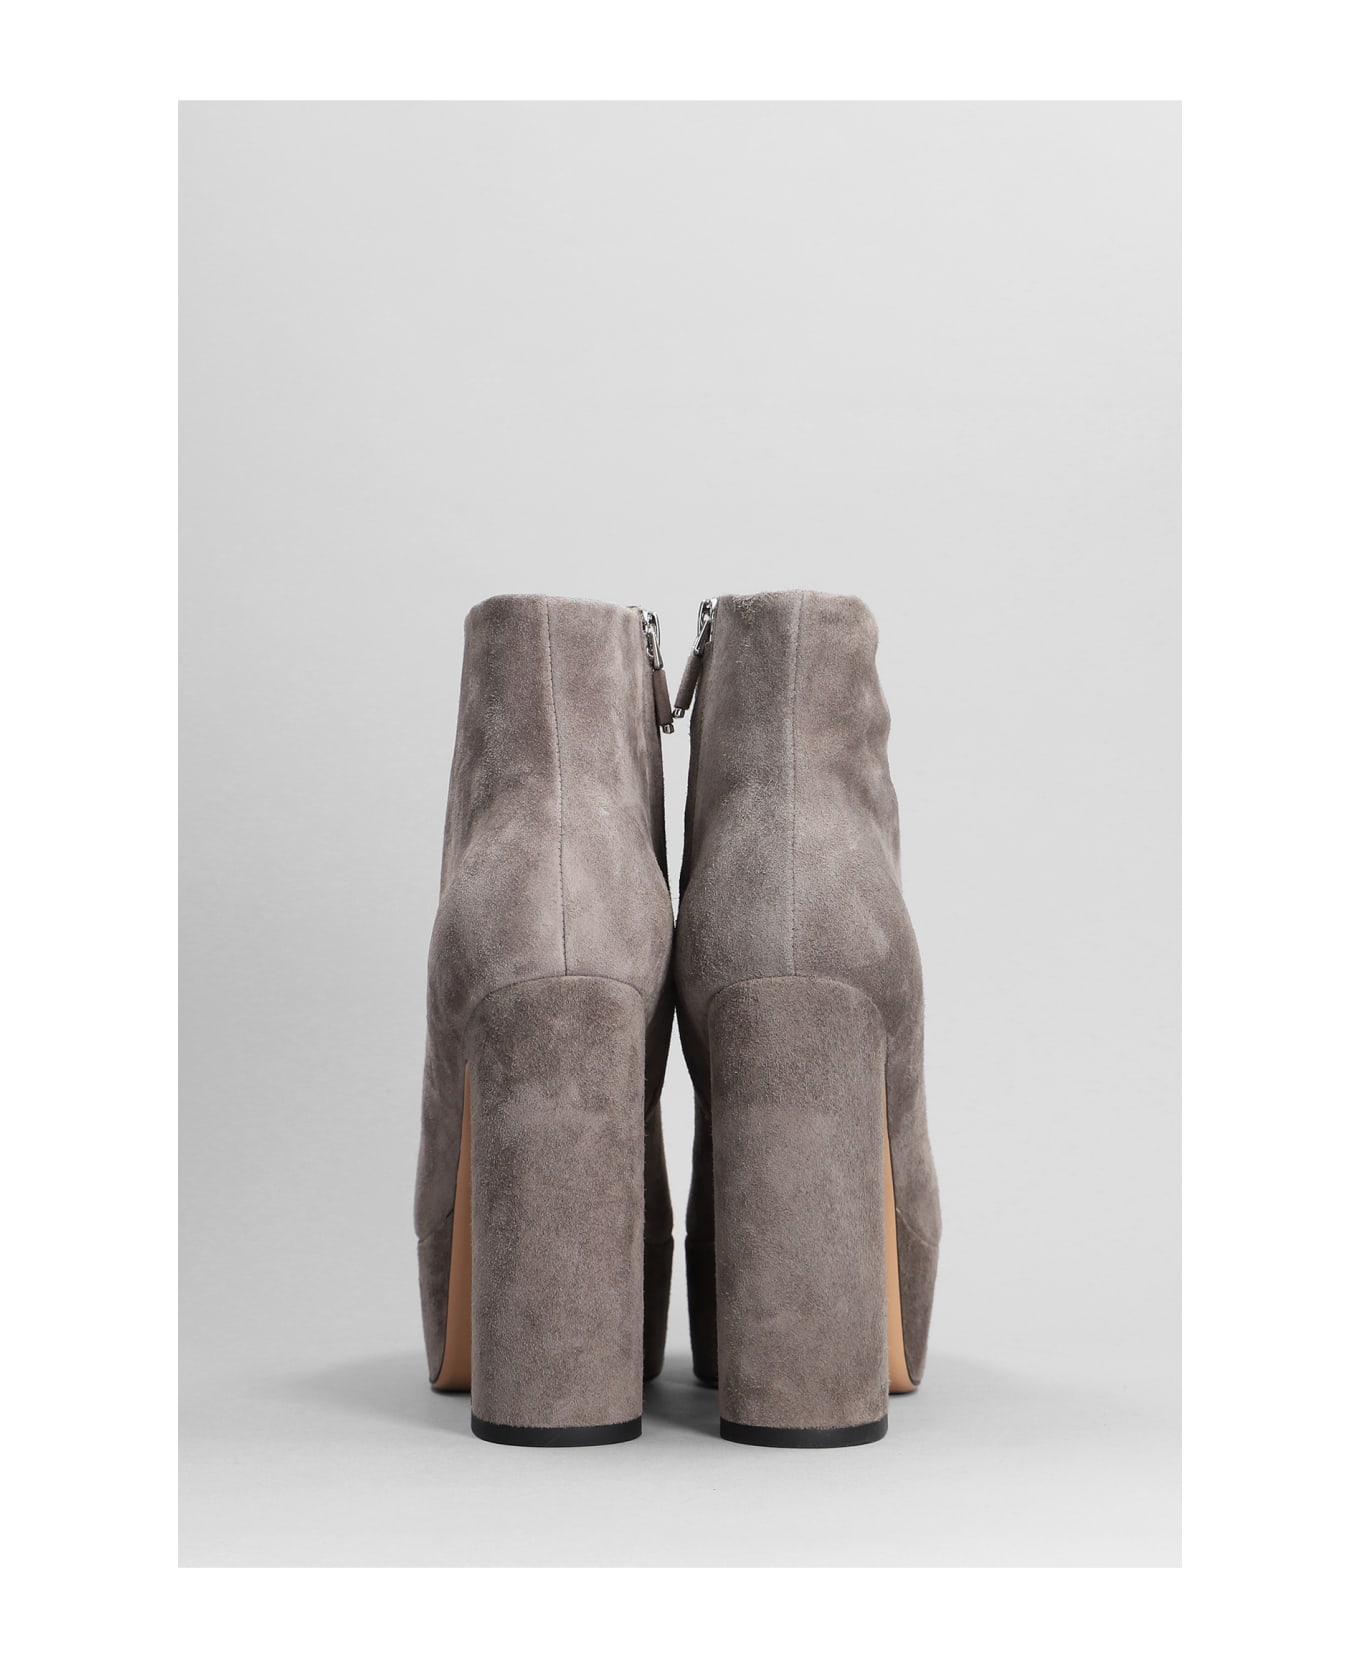 Lola Cruz High Heels Ankle Boots In Grey Suede - grey